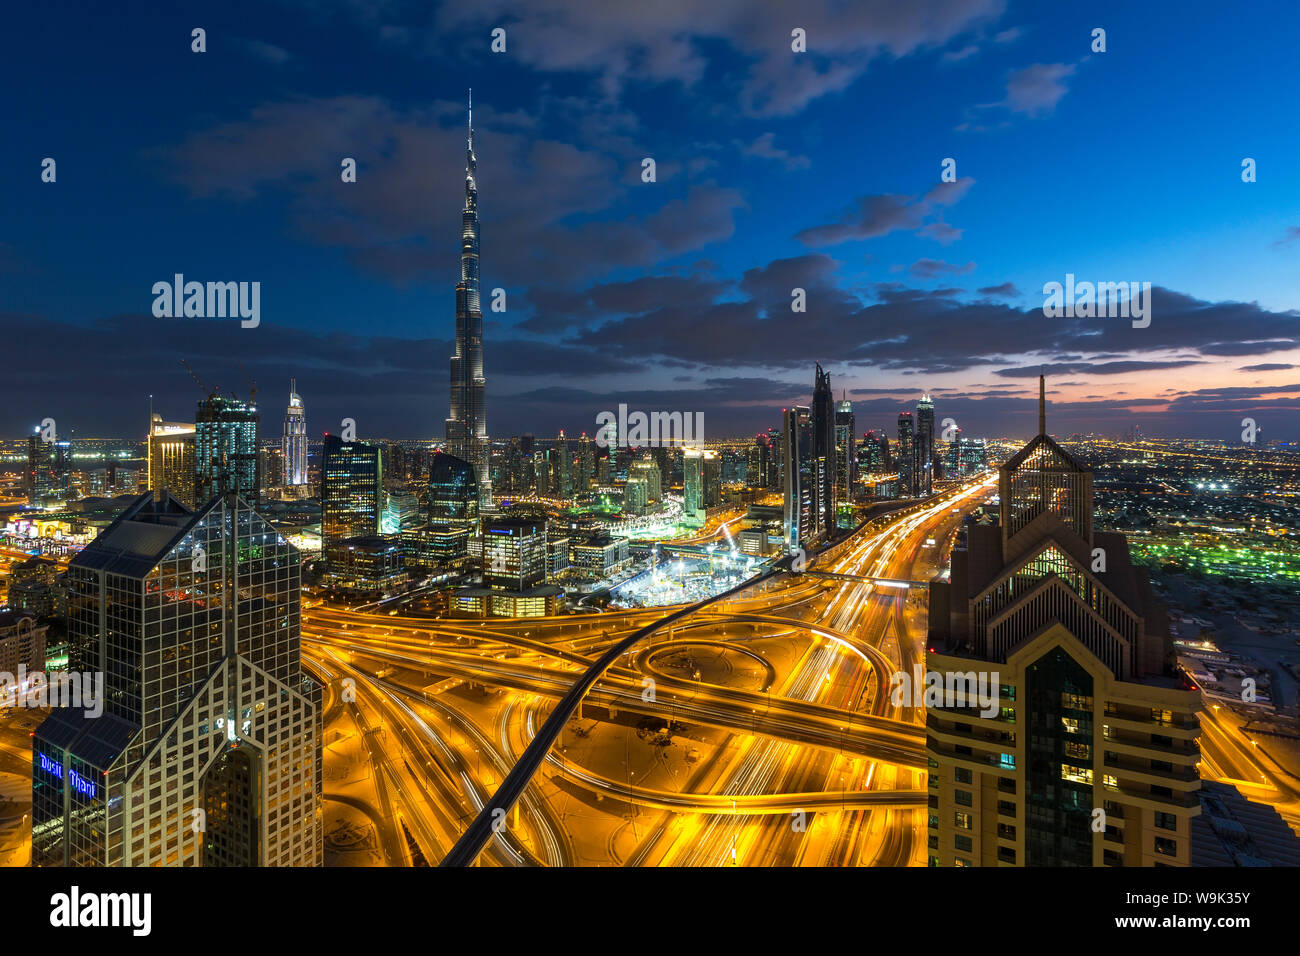 The Burj Khalifa Dubai, elevated view across Sheikh Zayed Road and Financial Centre Road Interchange, Downtown Dubai, Dubai, United Arab Emirates Stock Photo